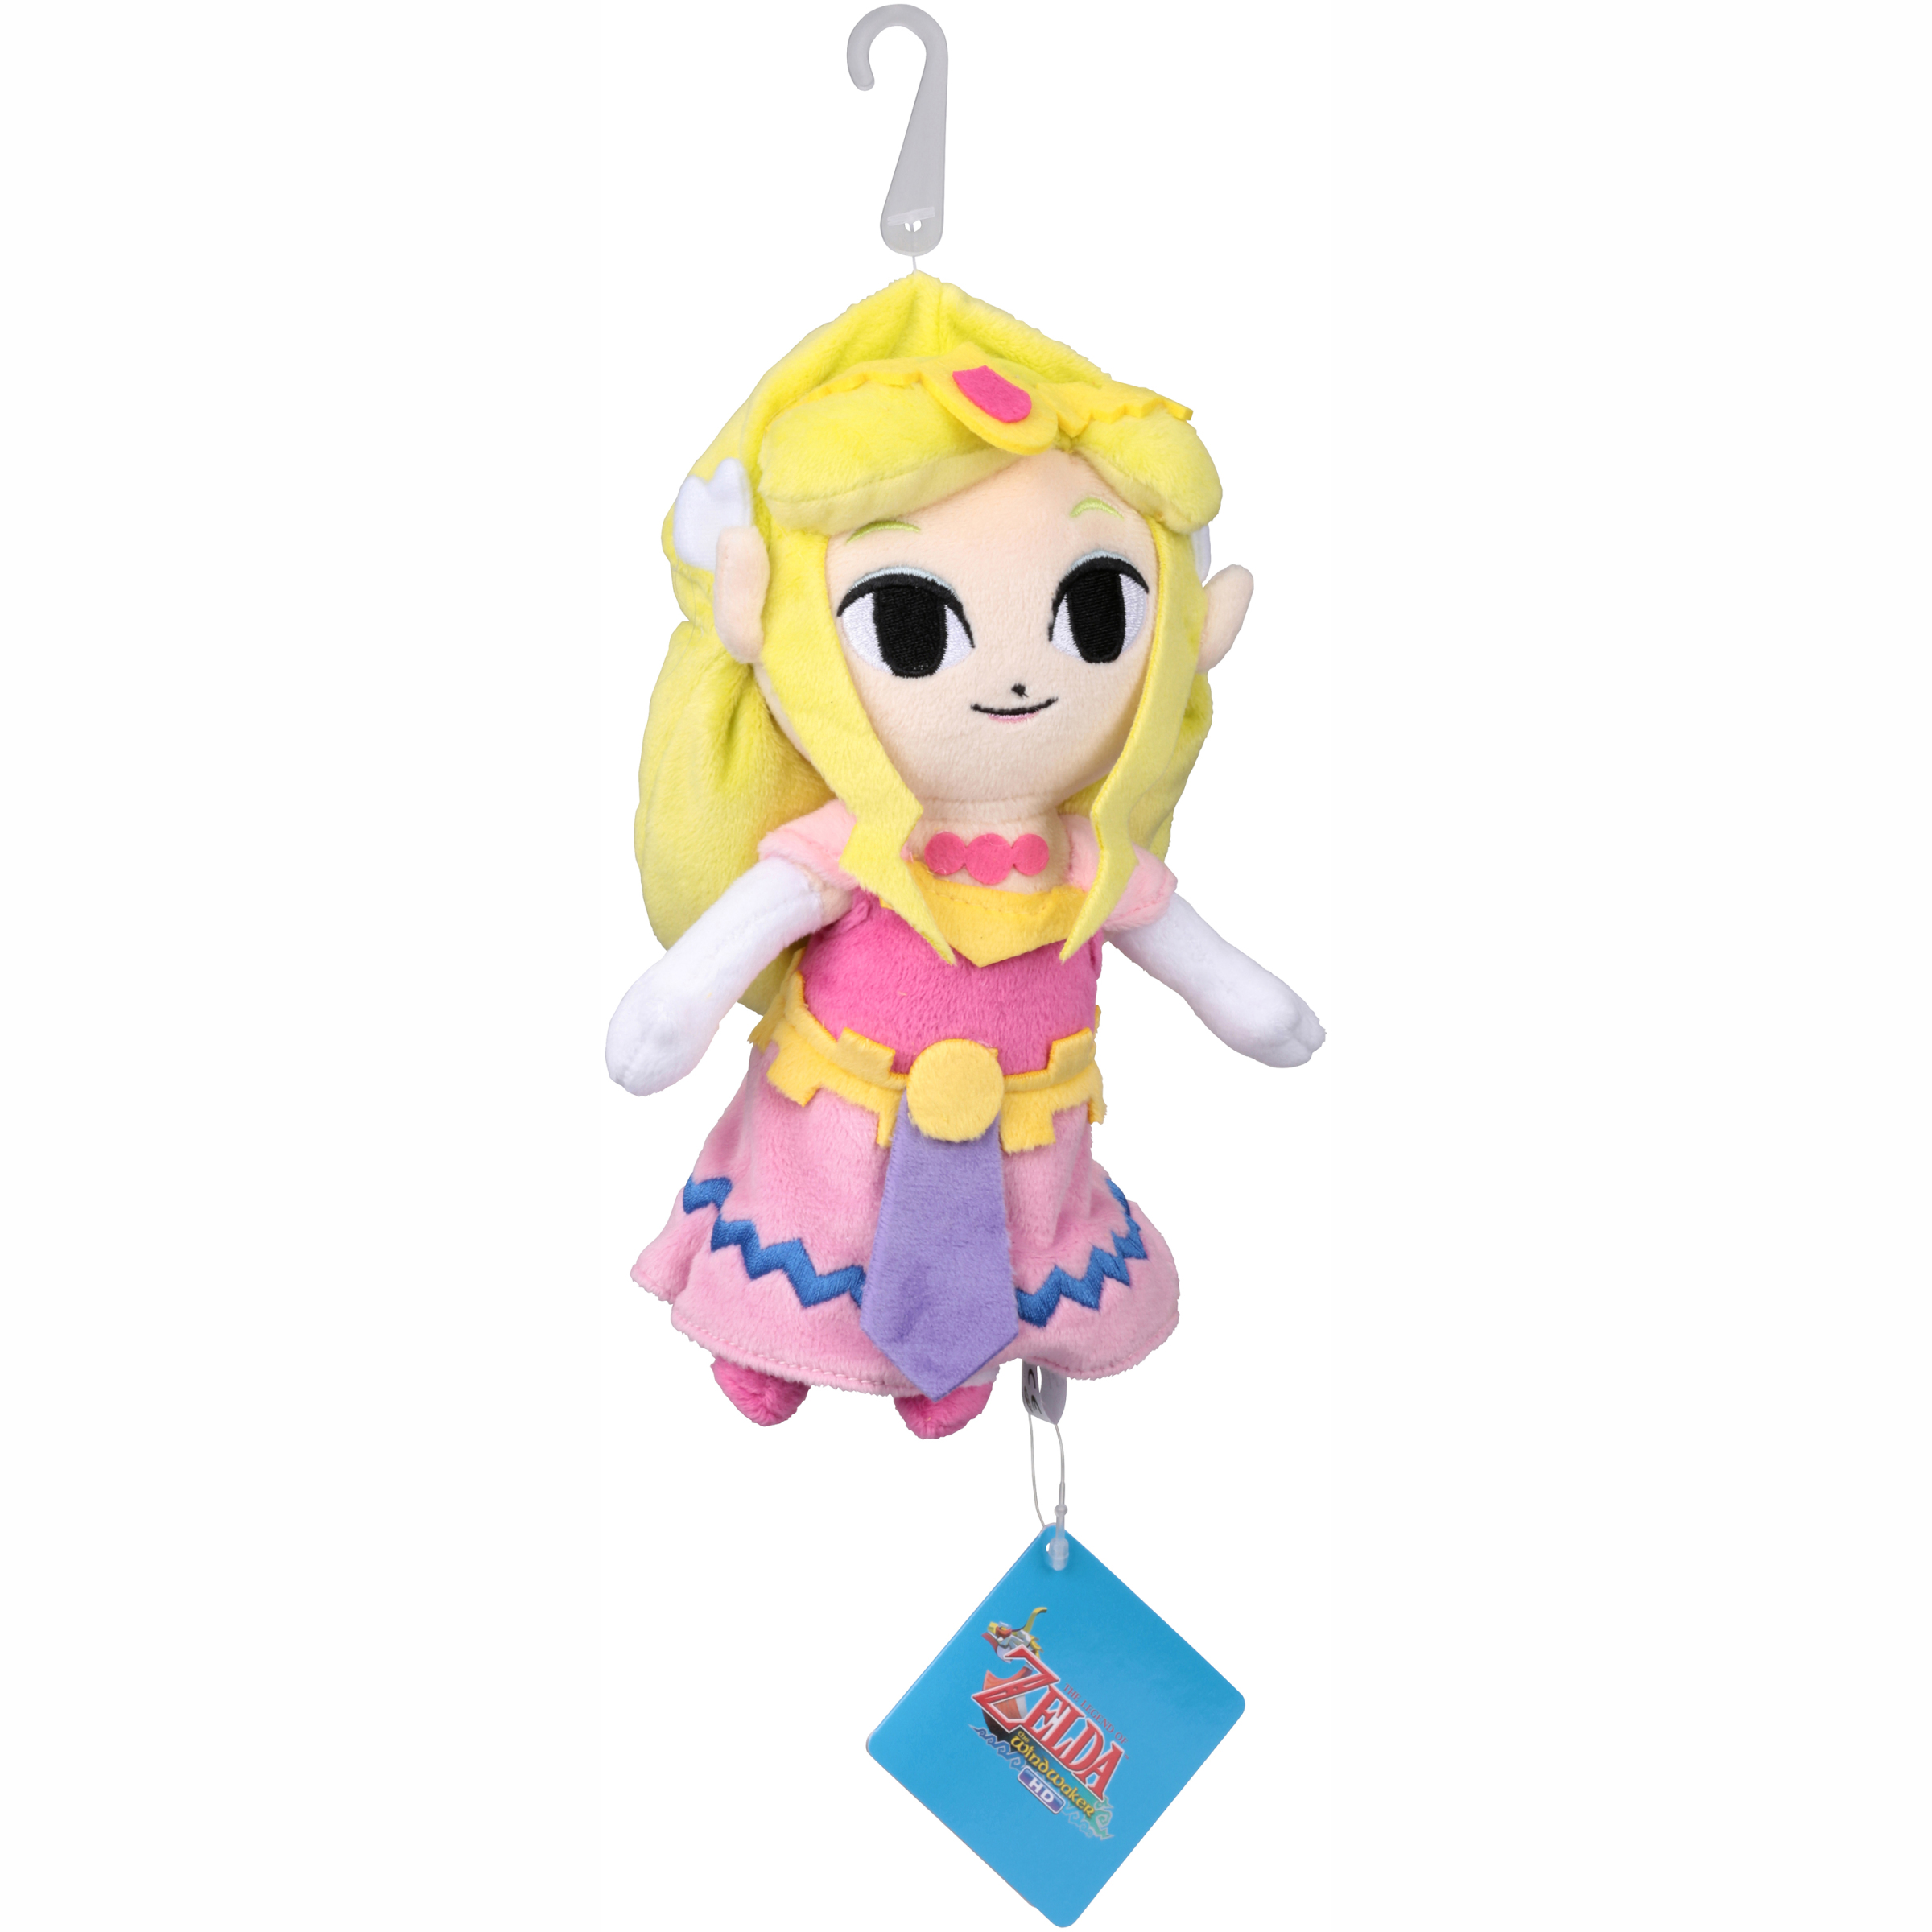 For Nintendo Zelda The Wind Waker Princess Zelda Plush Toy, 8 